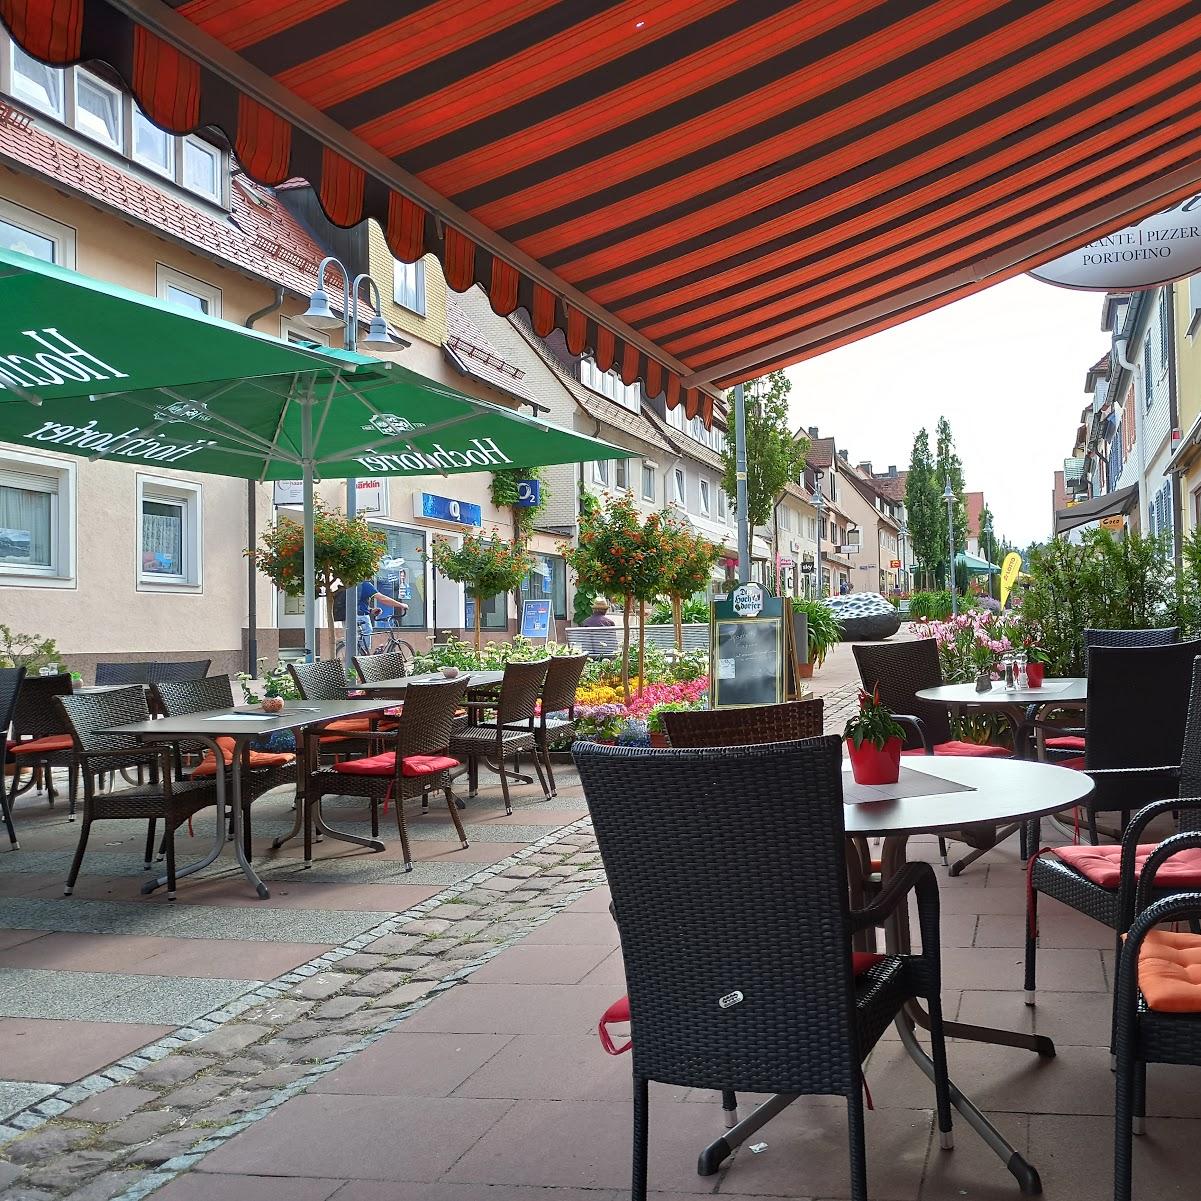 Restaurant "Ristorante Da Jupi" in Freudenstadt